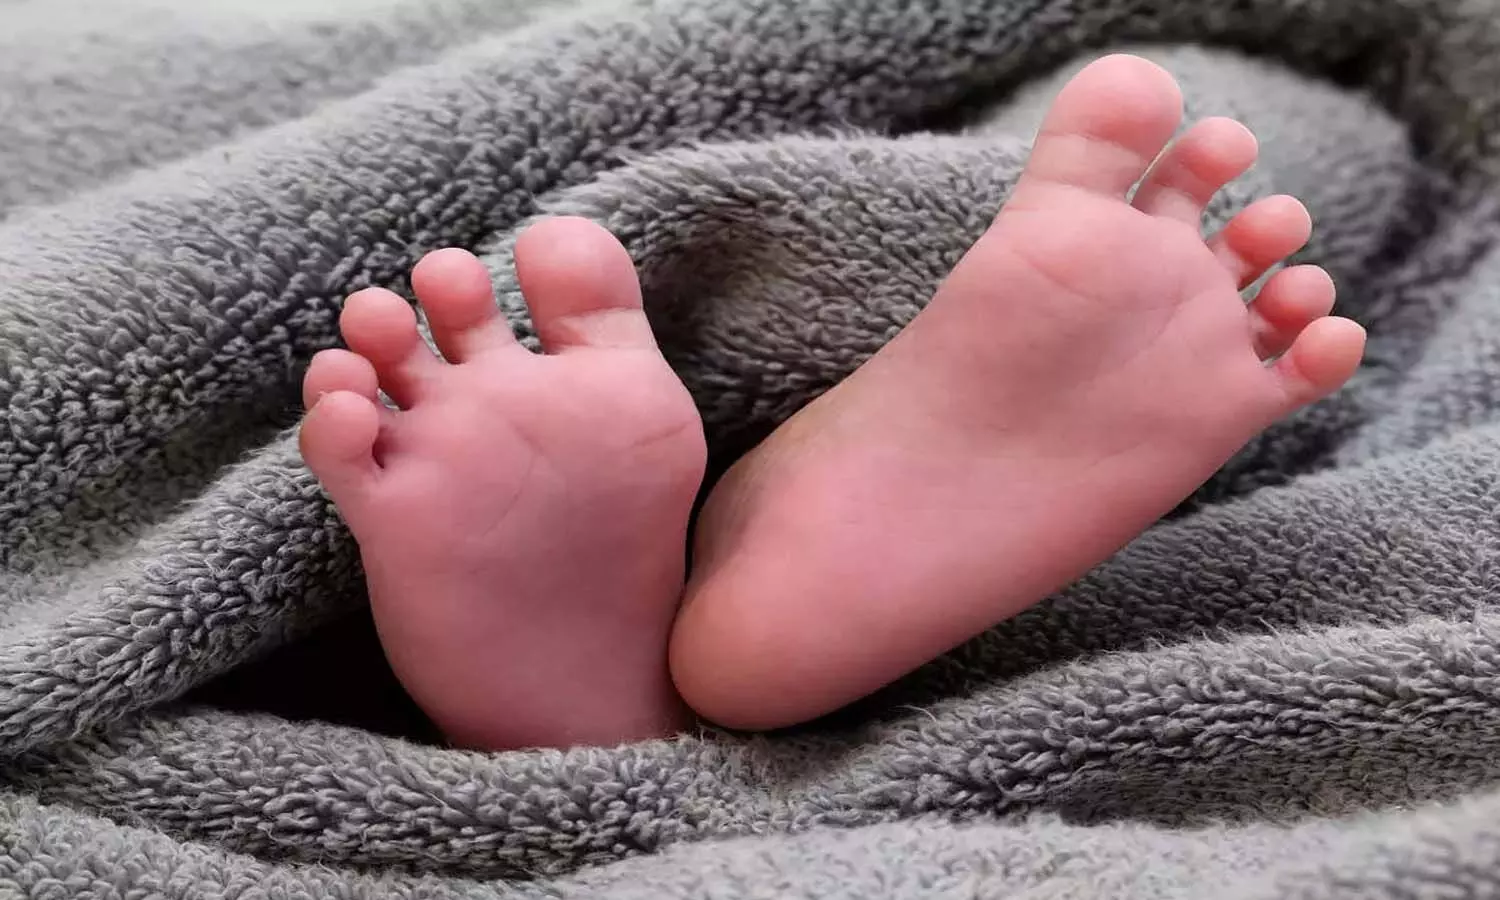 Newborn death due to doctor negligence